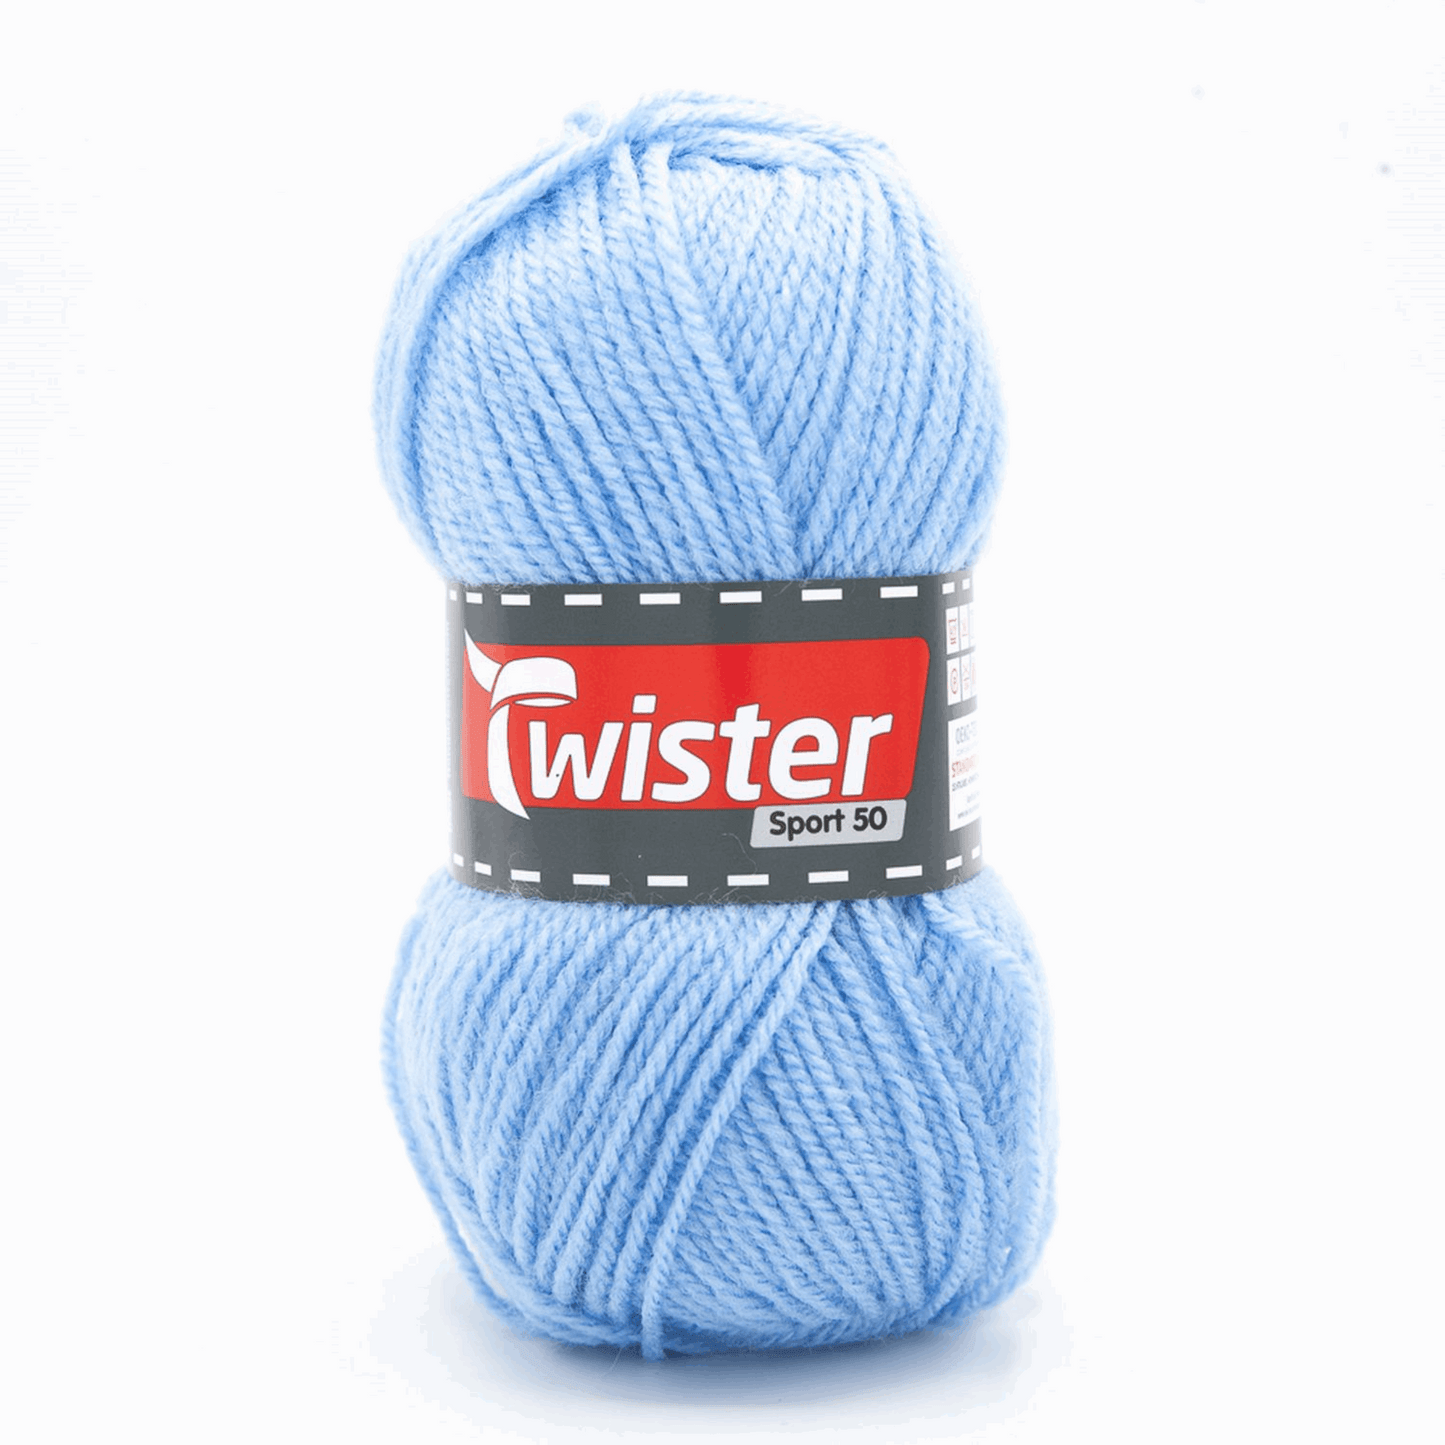 Twister Sport, 50g, 98304, color bleu 51